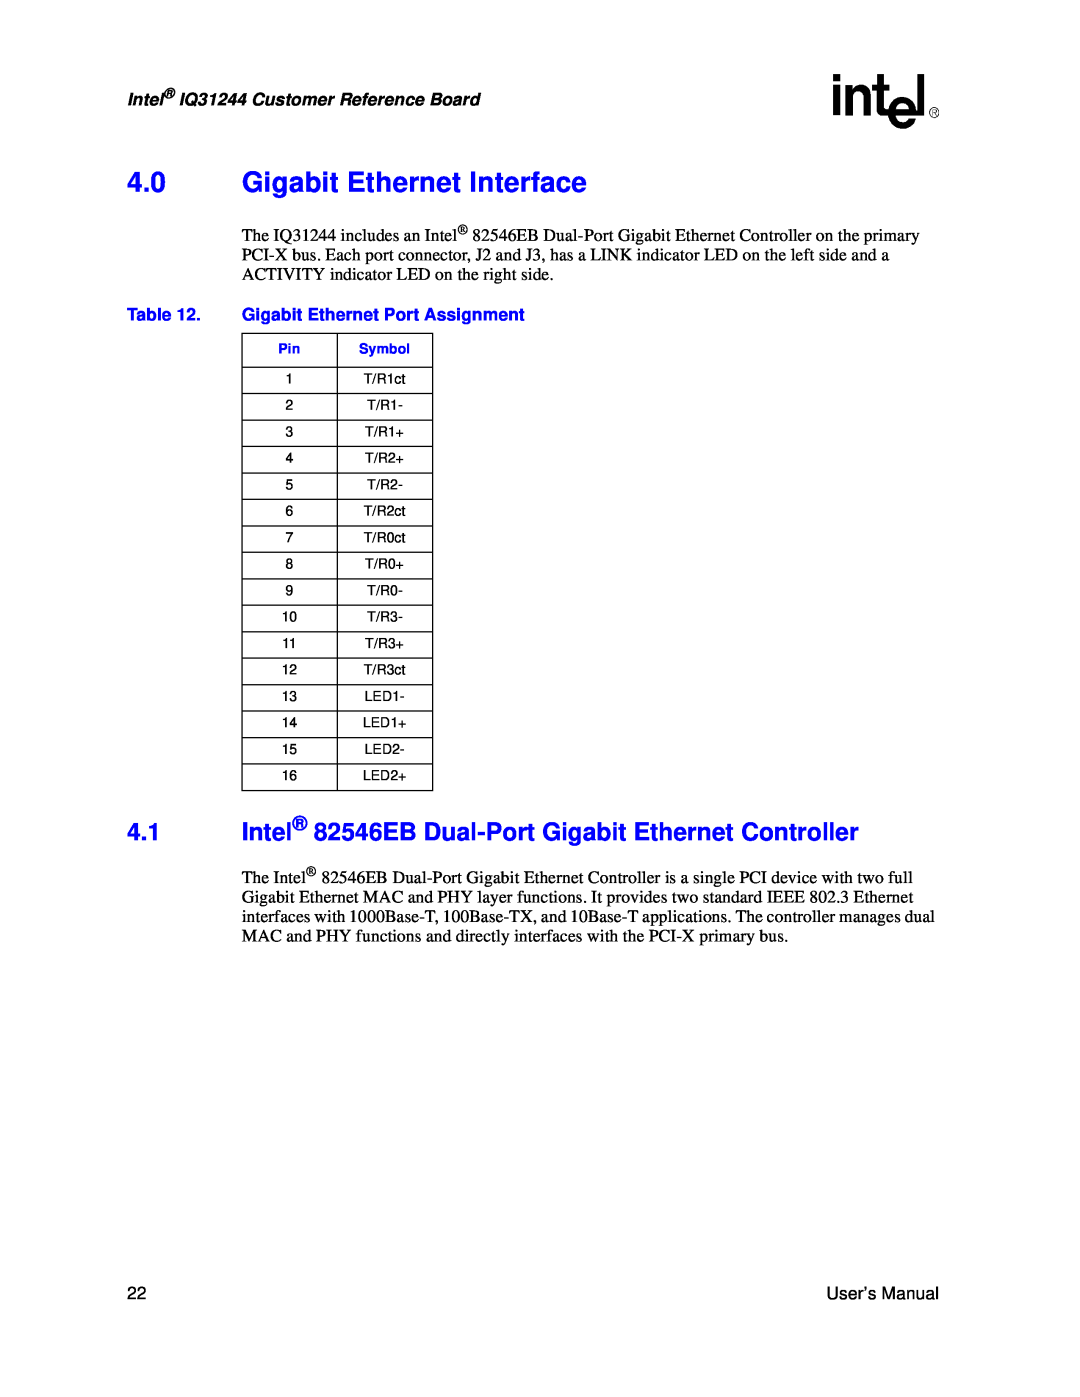 Intel 4.0Gigabit Ethernet Interface, Gigabit Ethernet Port Assignment, Intel IQ31244 Customer Reference Board 